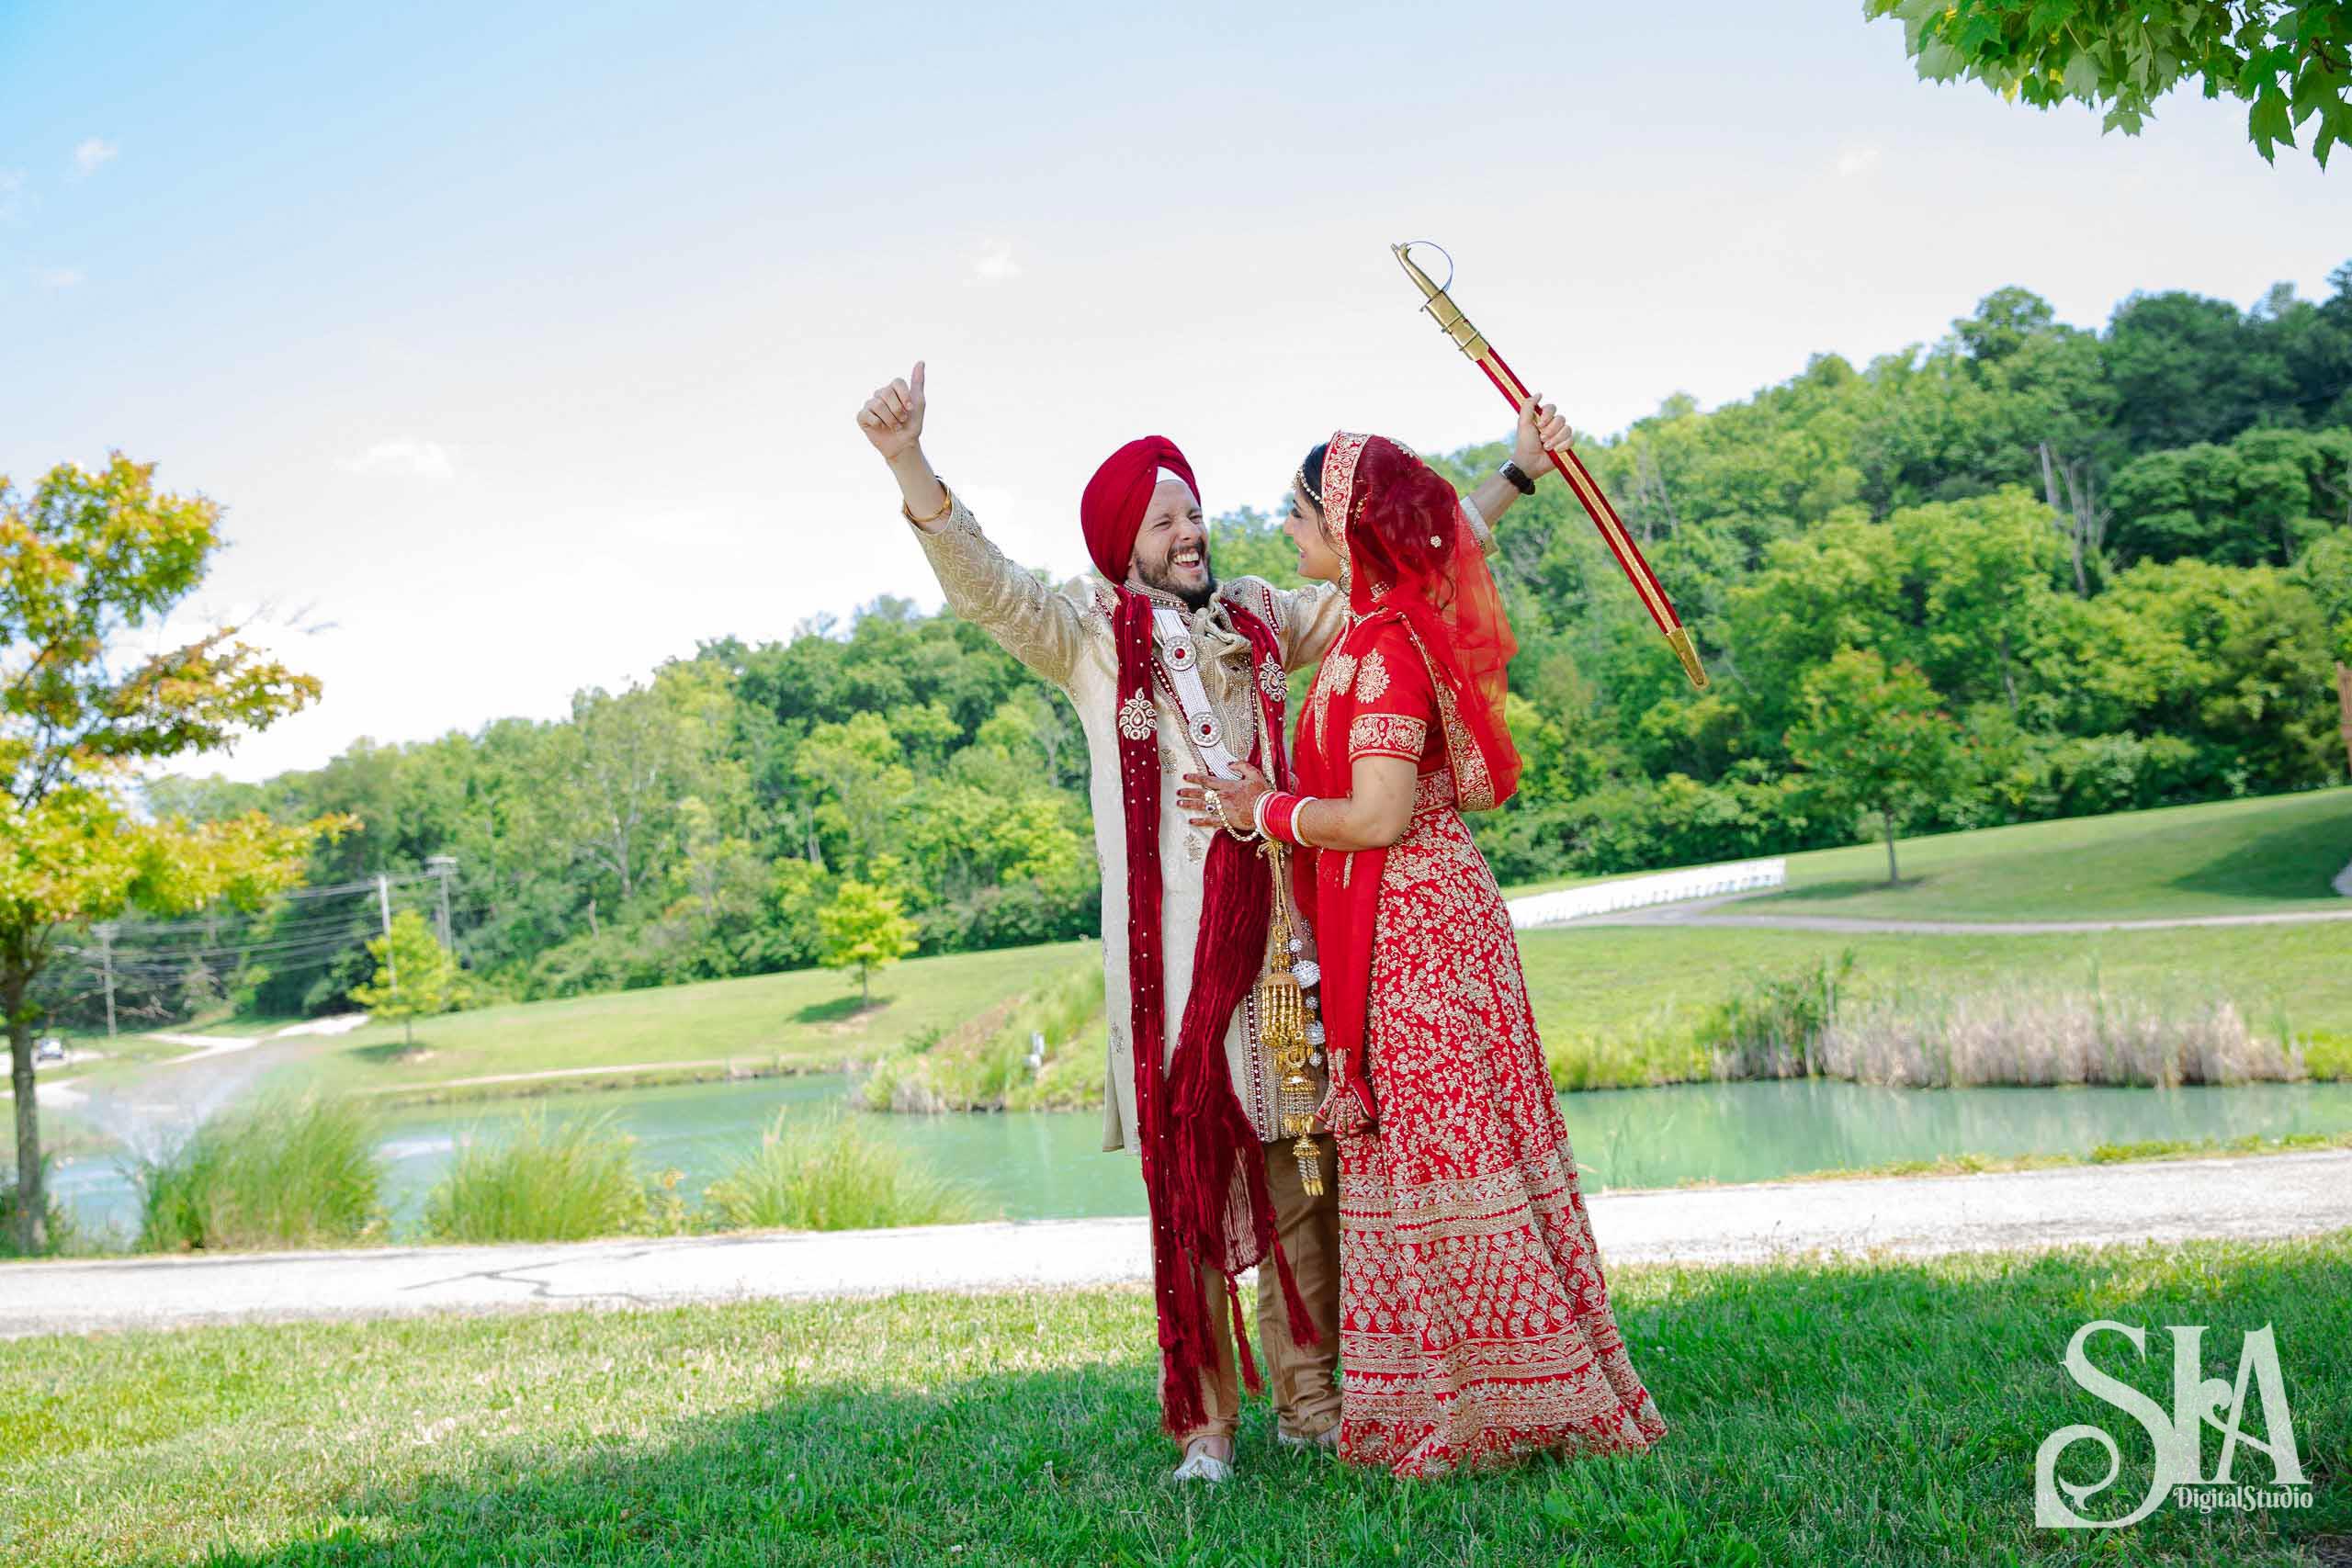 Narinder & Jaymes | The Fun Multi-Cultural Wedding We Had